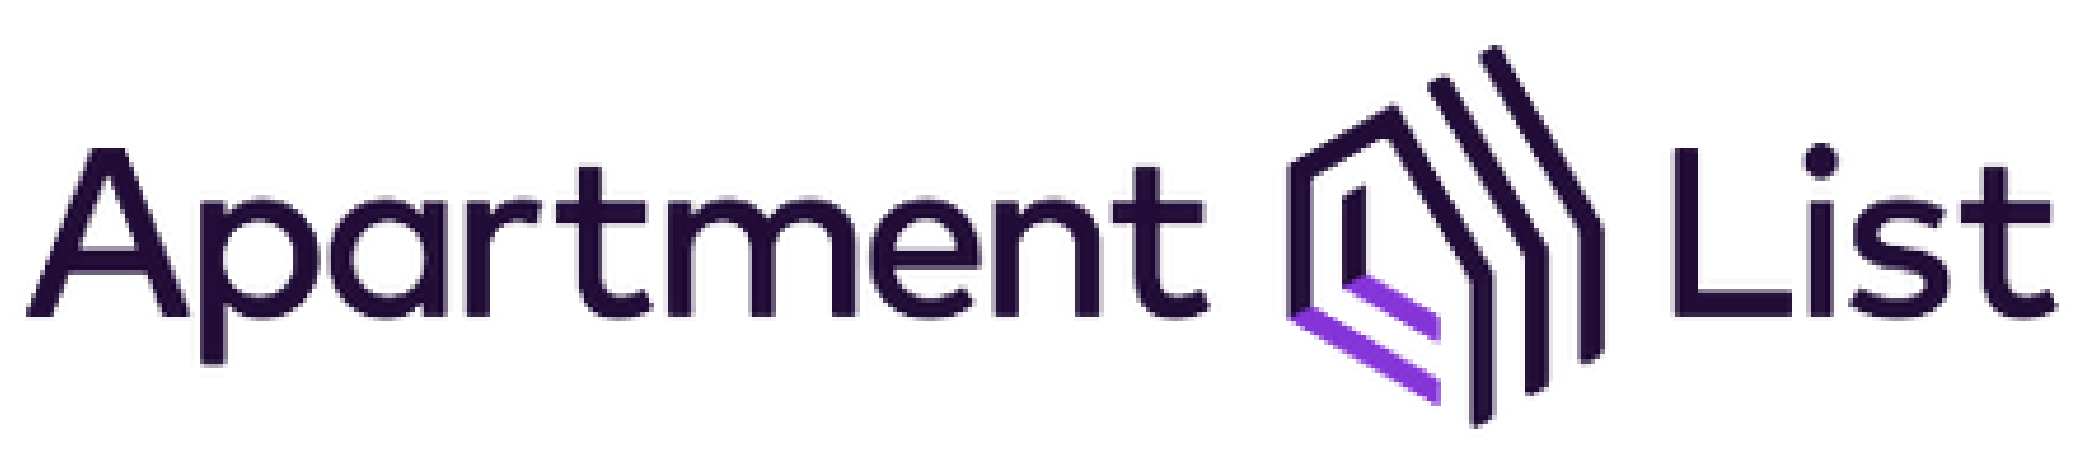 Apartment List Logo